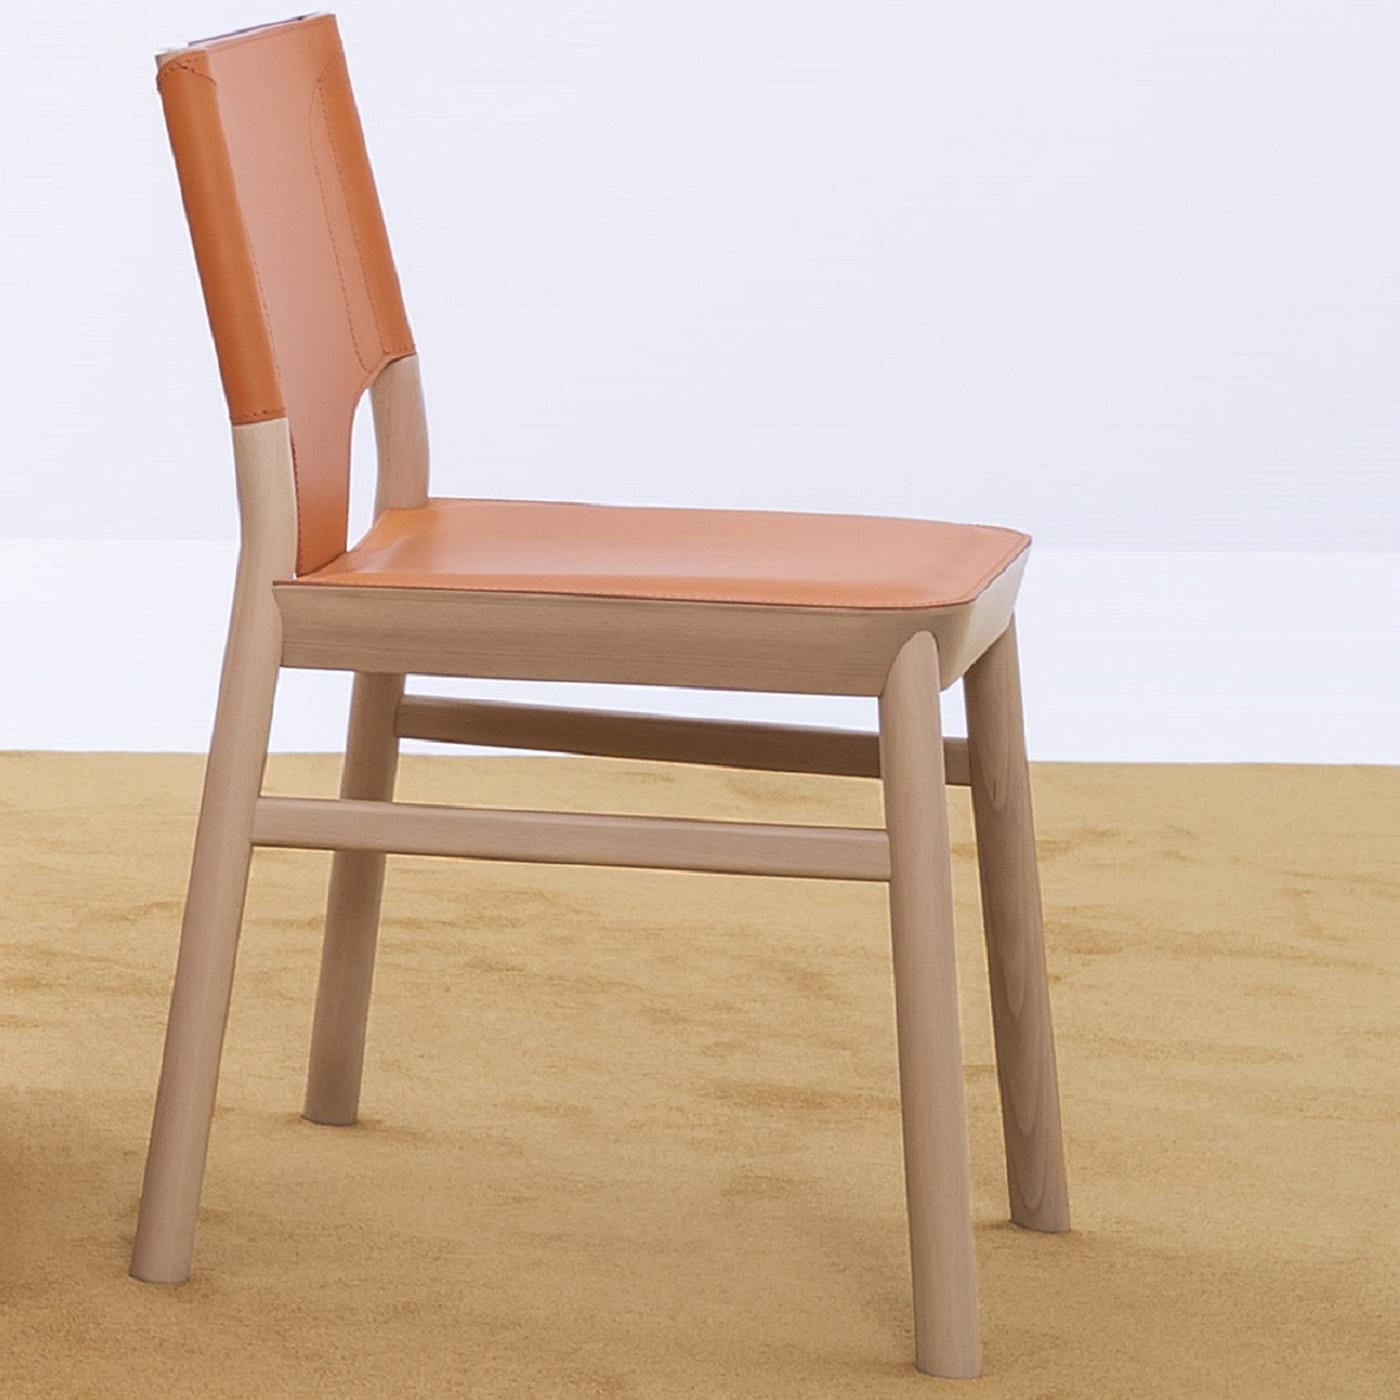 Italian Marimba Dining Chair by Emilio Nanni For Sale